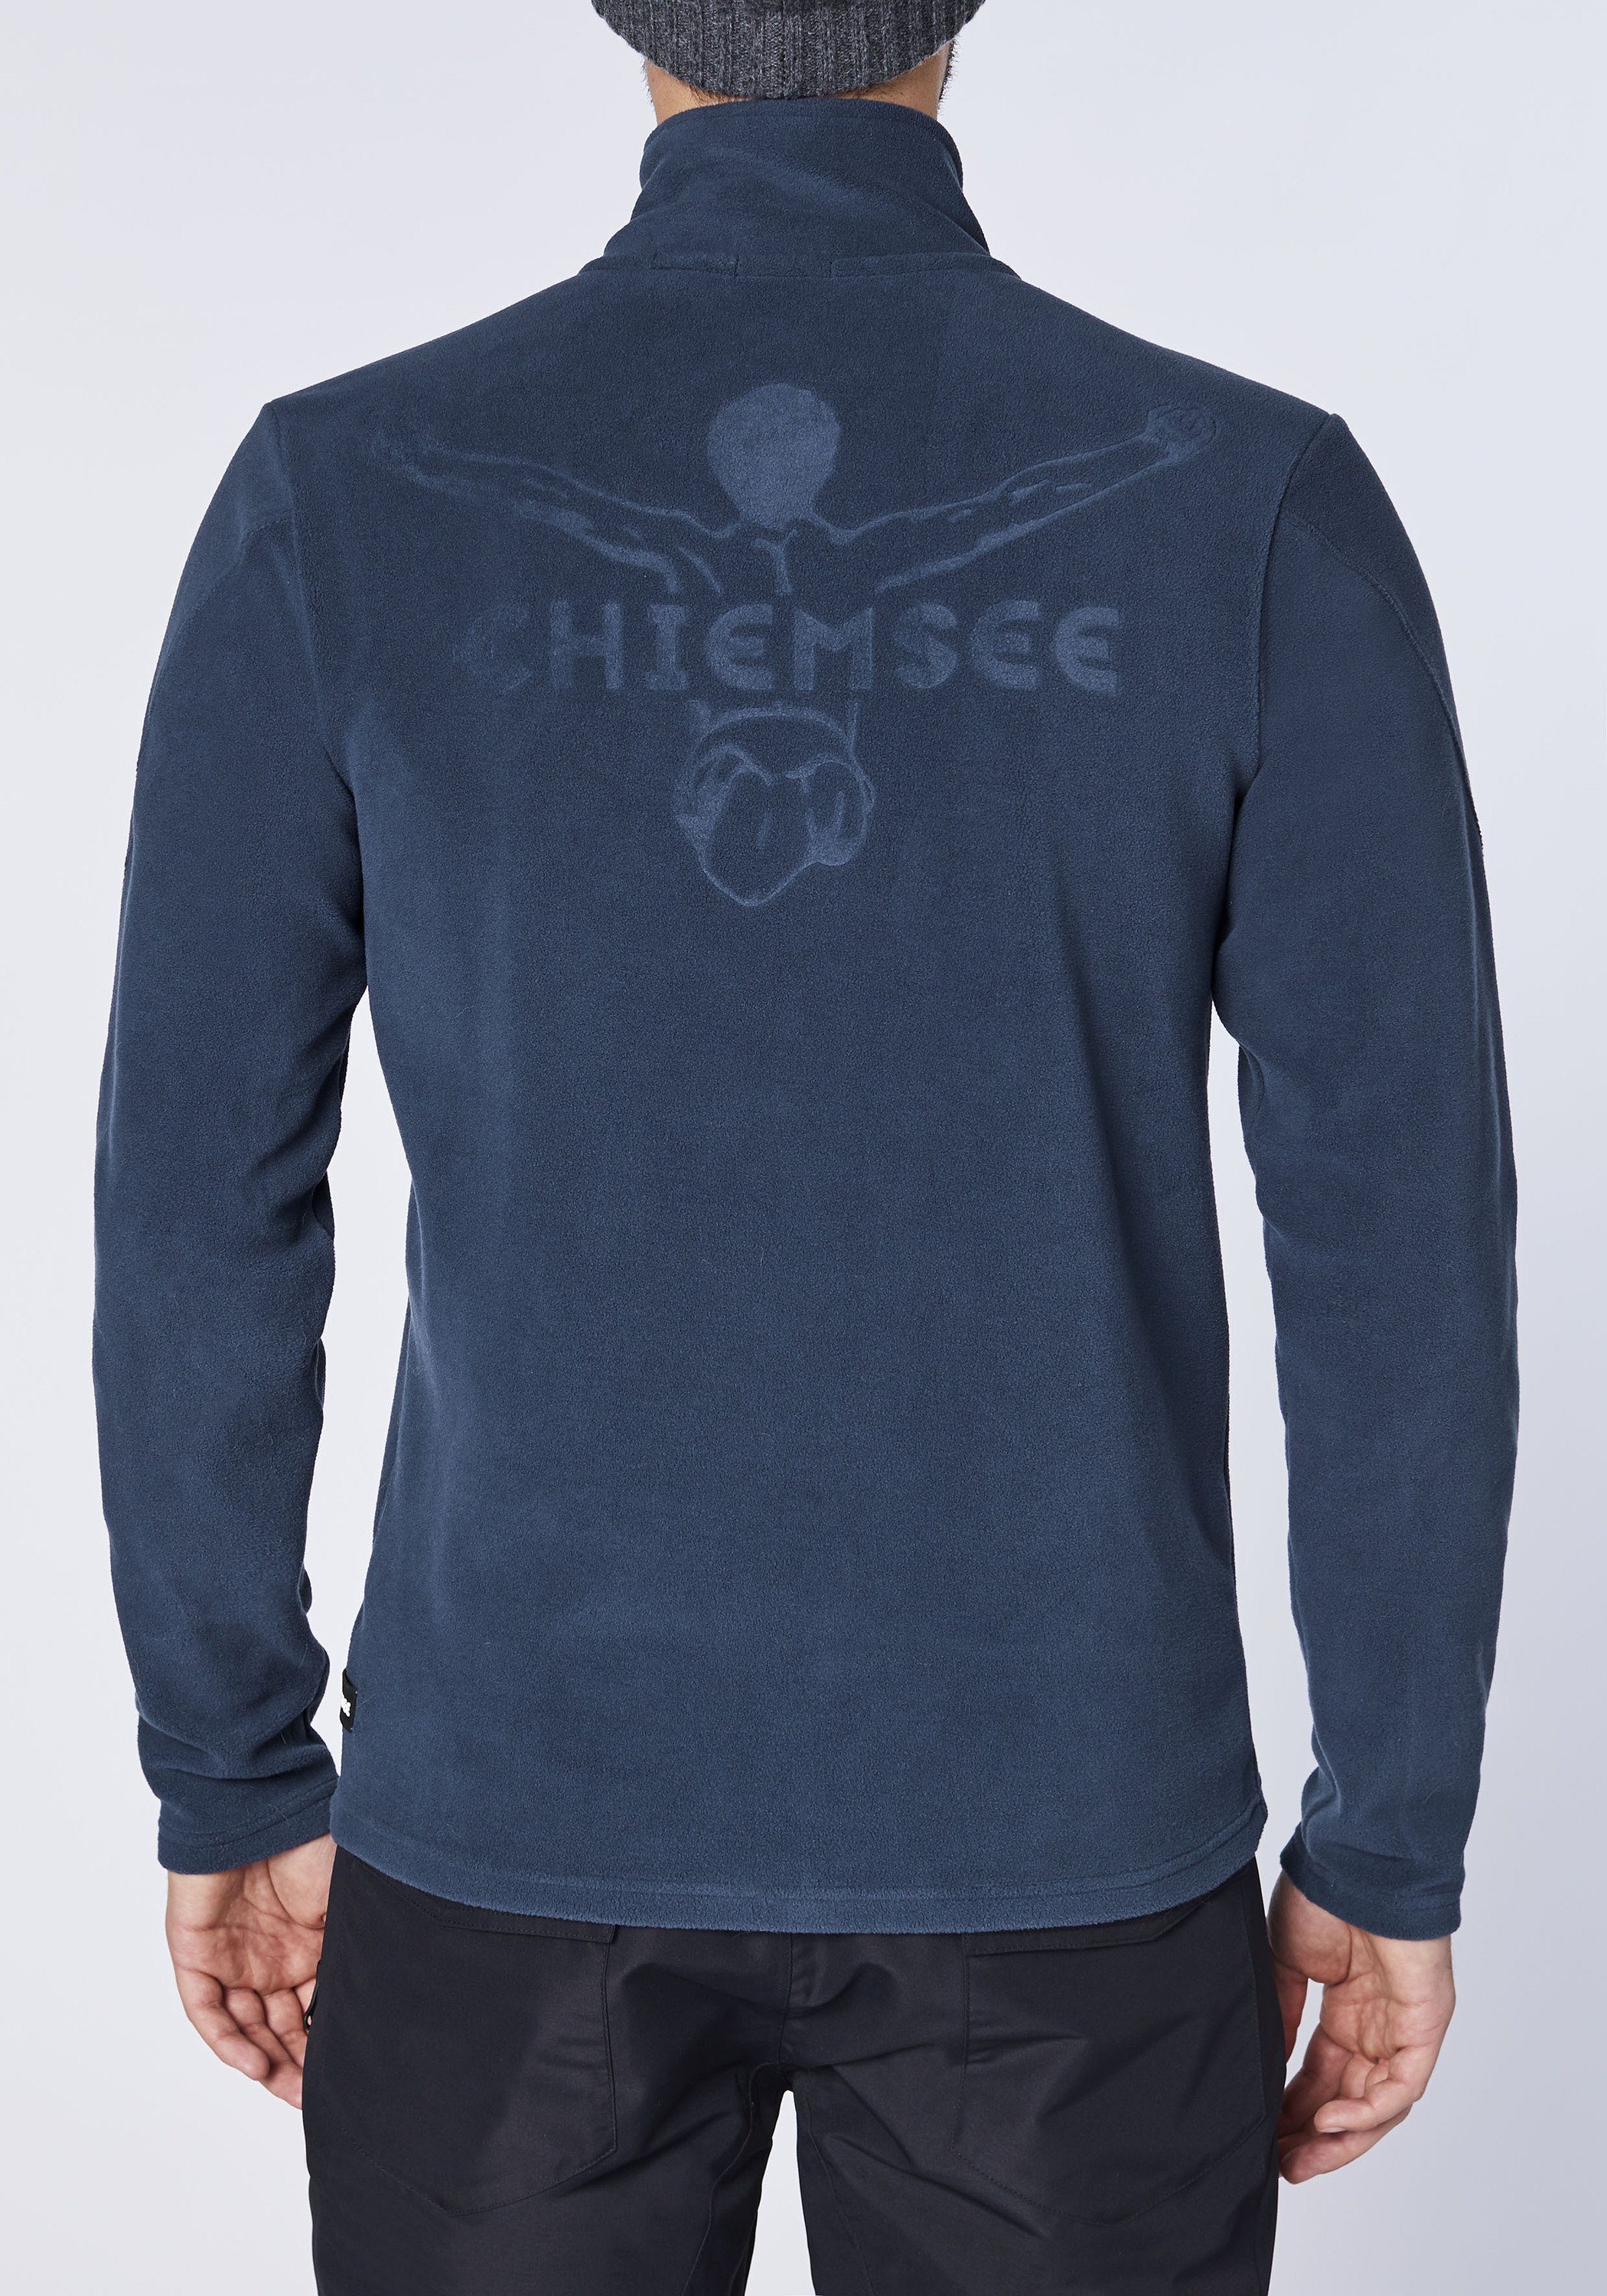 blau mit dunkel Fleecejacke 1 im Basic-Stil Chiemsee Fleece-Jacke Jumper-Motiv